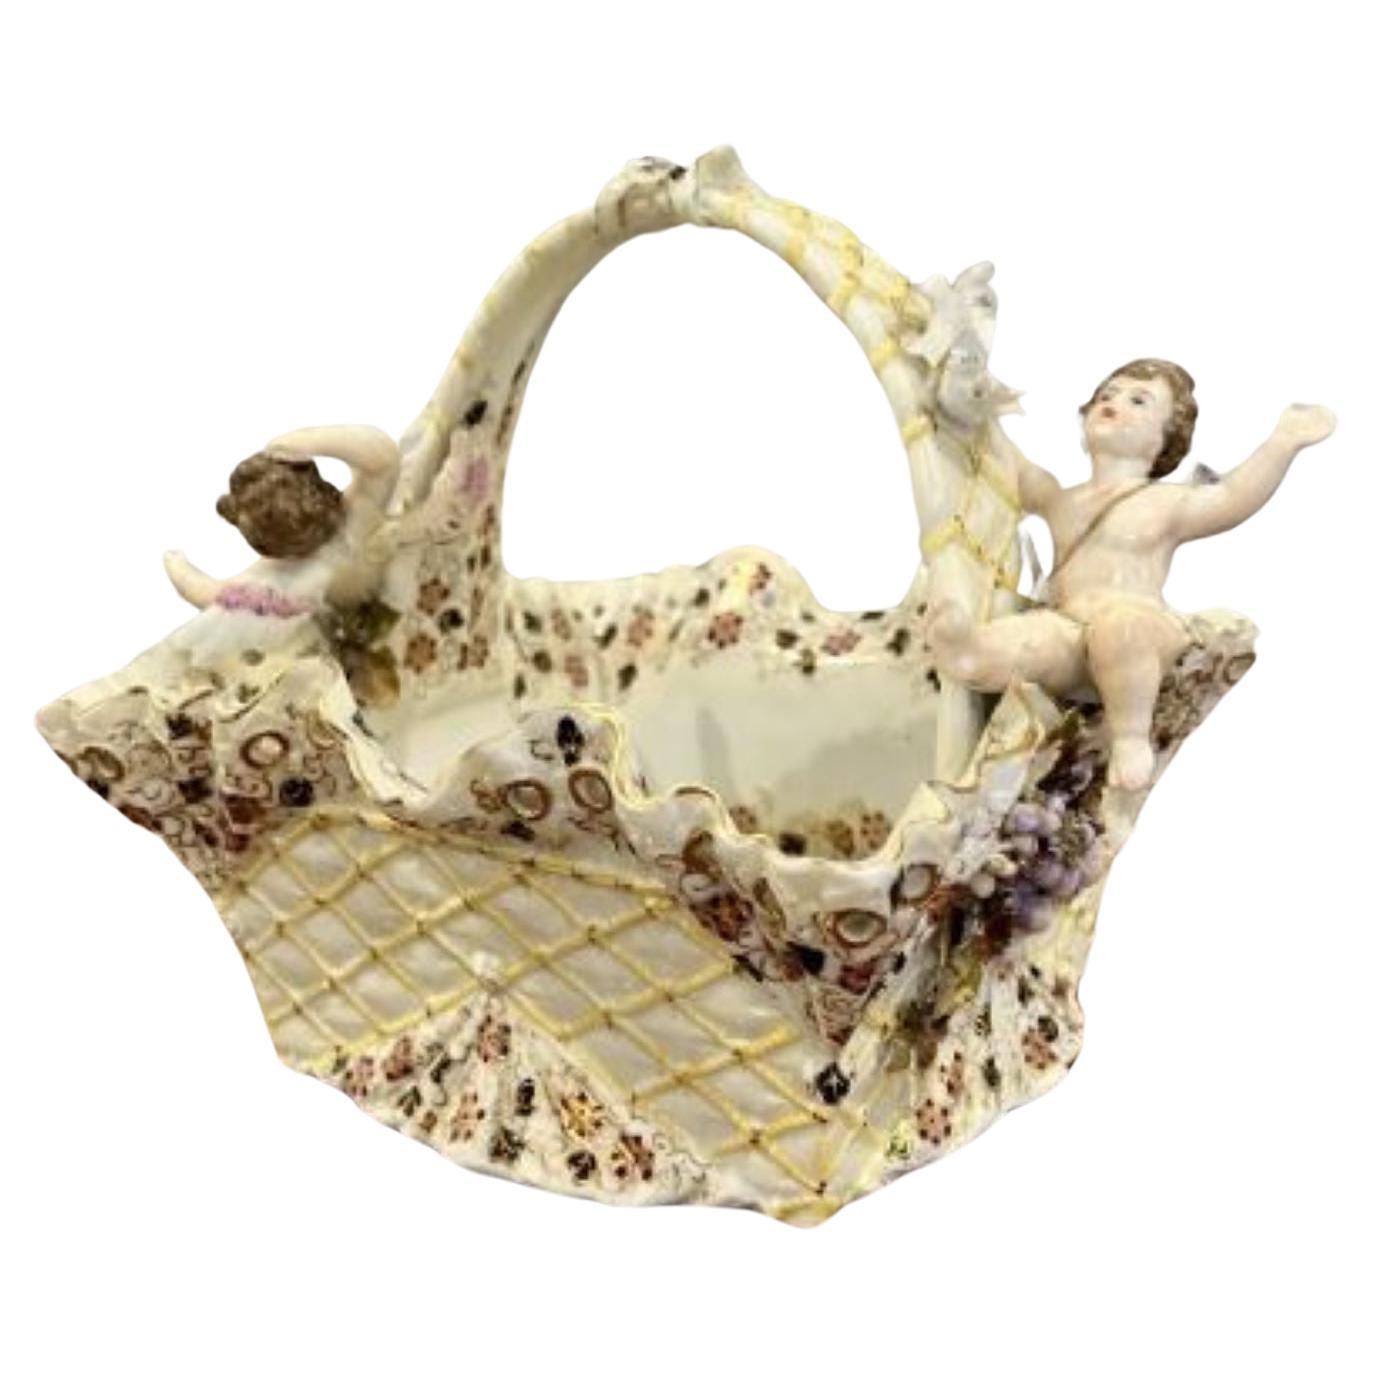 Fantastic quality antique Victorian porcelain basket For Sale